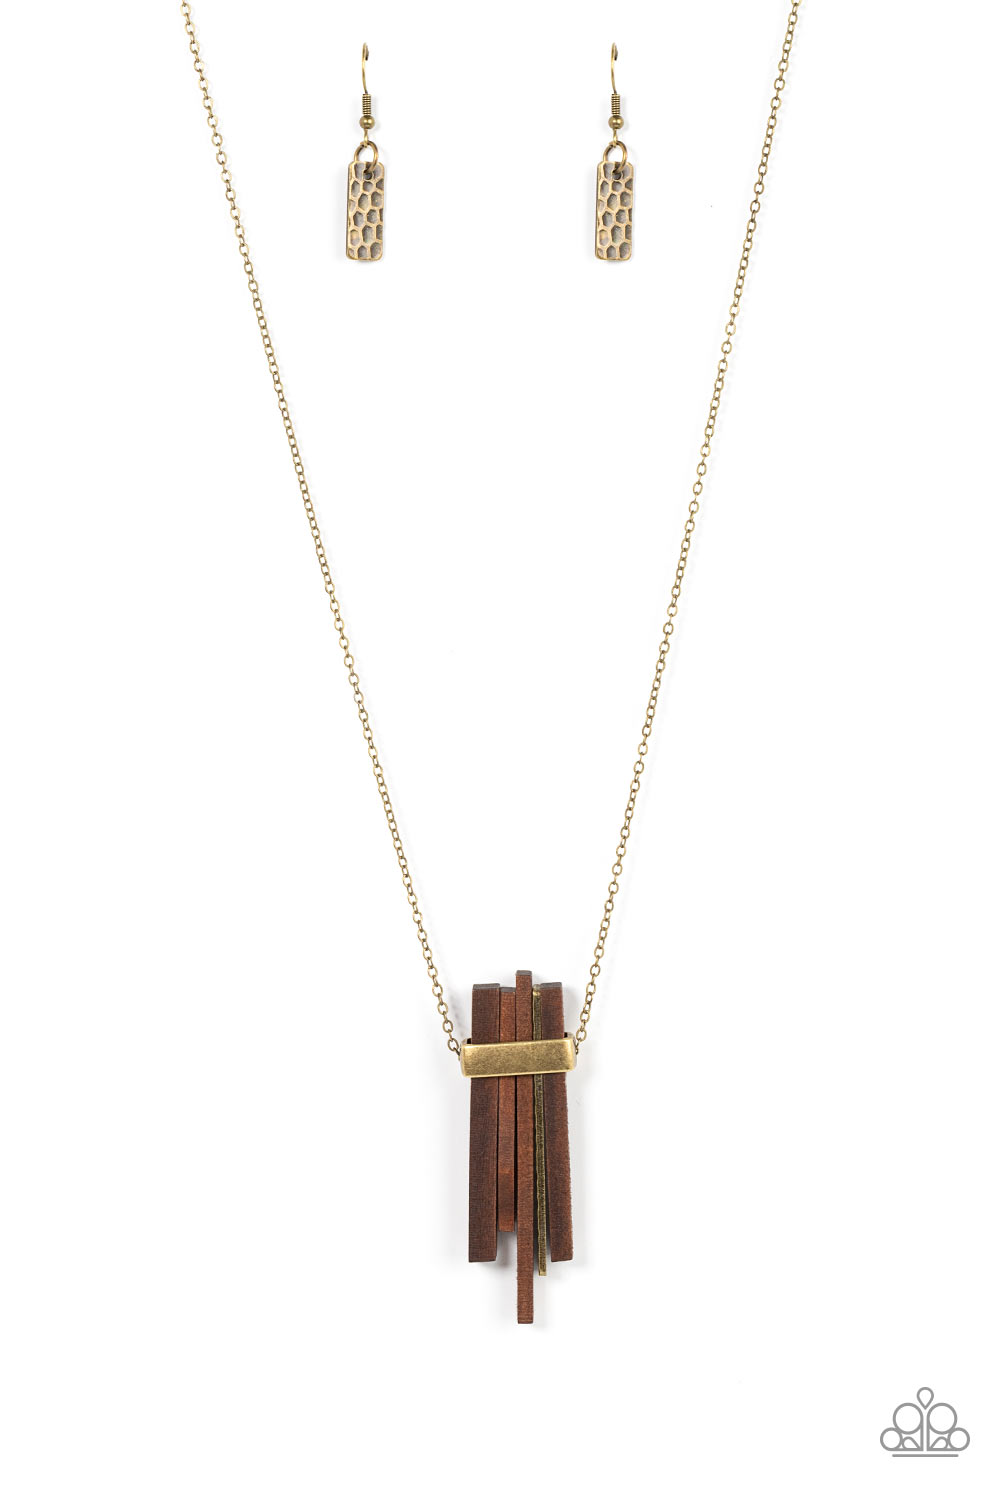 Cayman Castaway Necklace - Brass